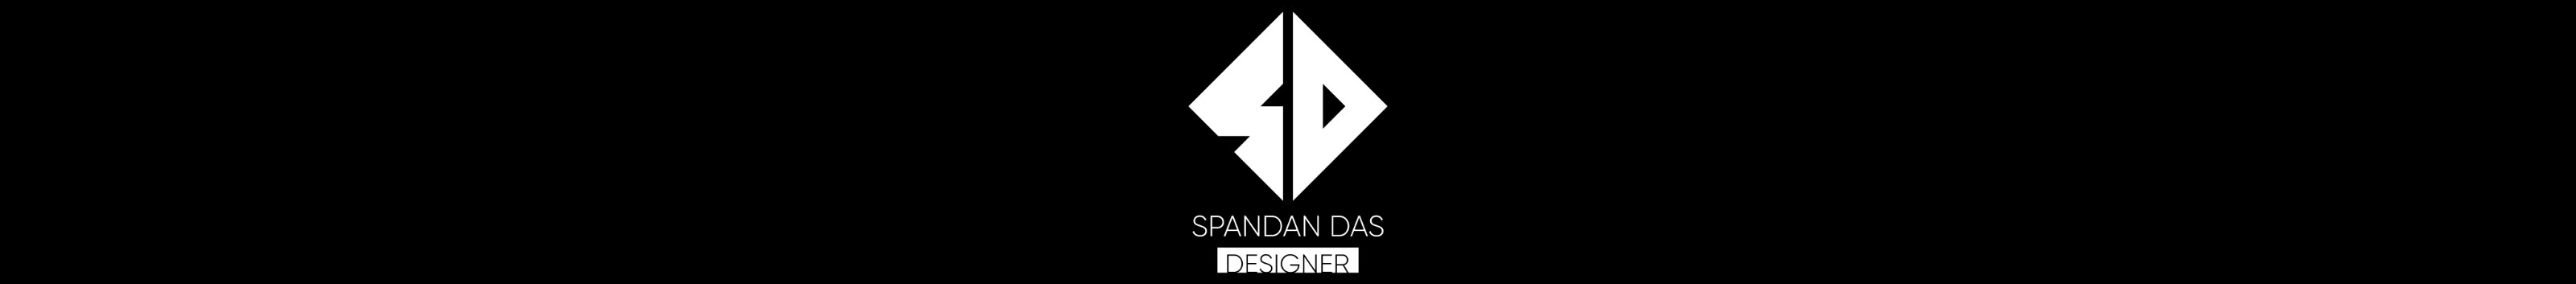 Spandan Das's profile banner